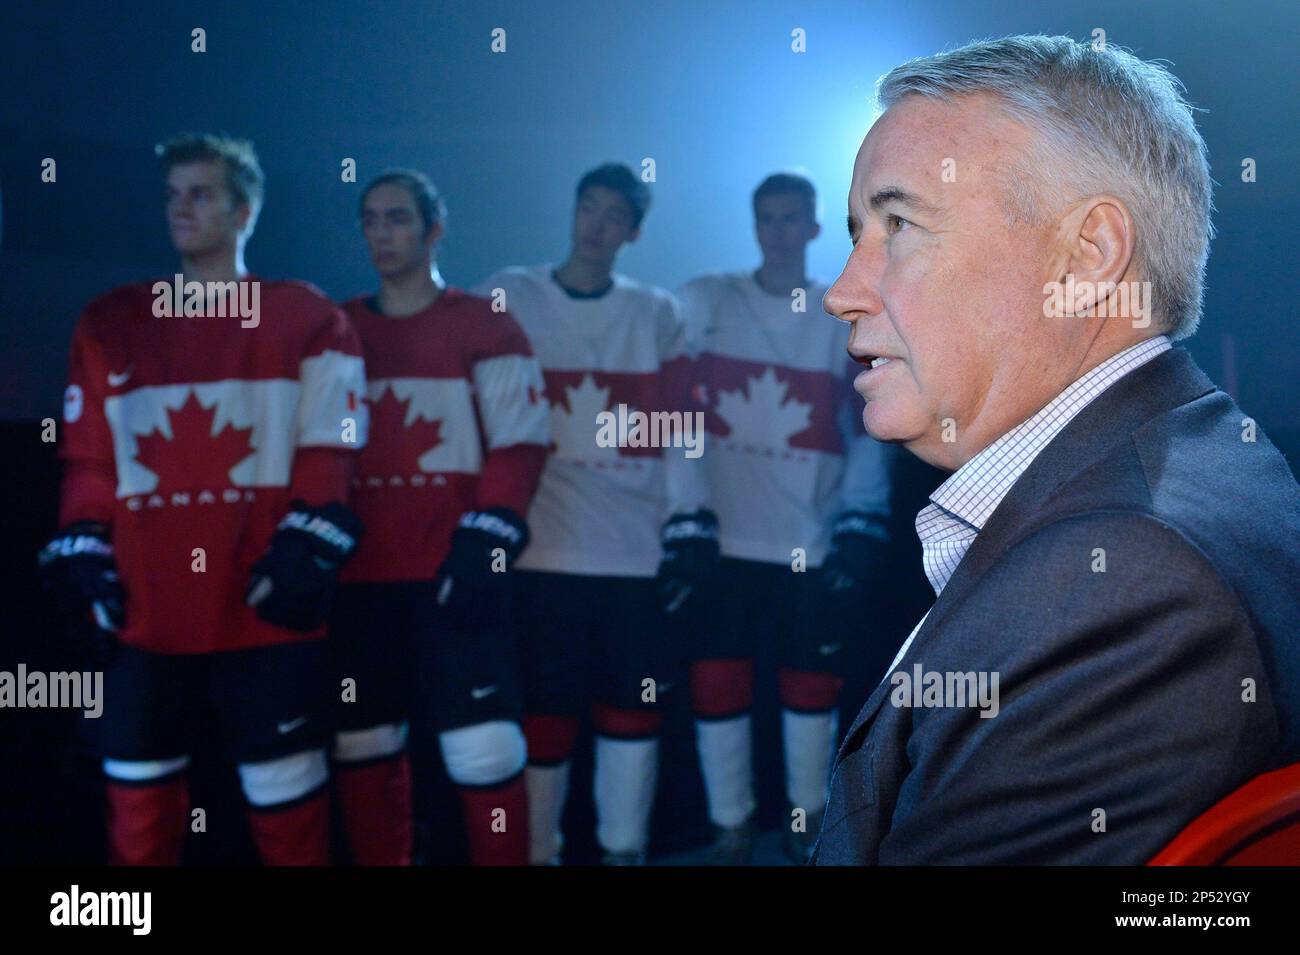 New Team Canada Olympic hockey jerseys unveiled (PHOTOS)